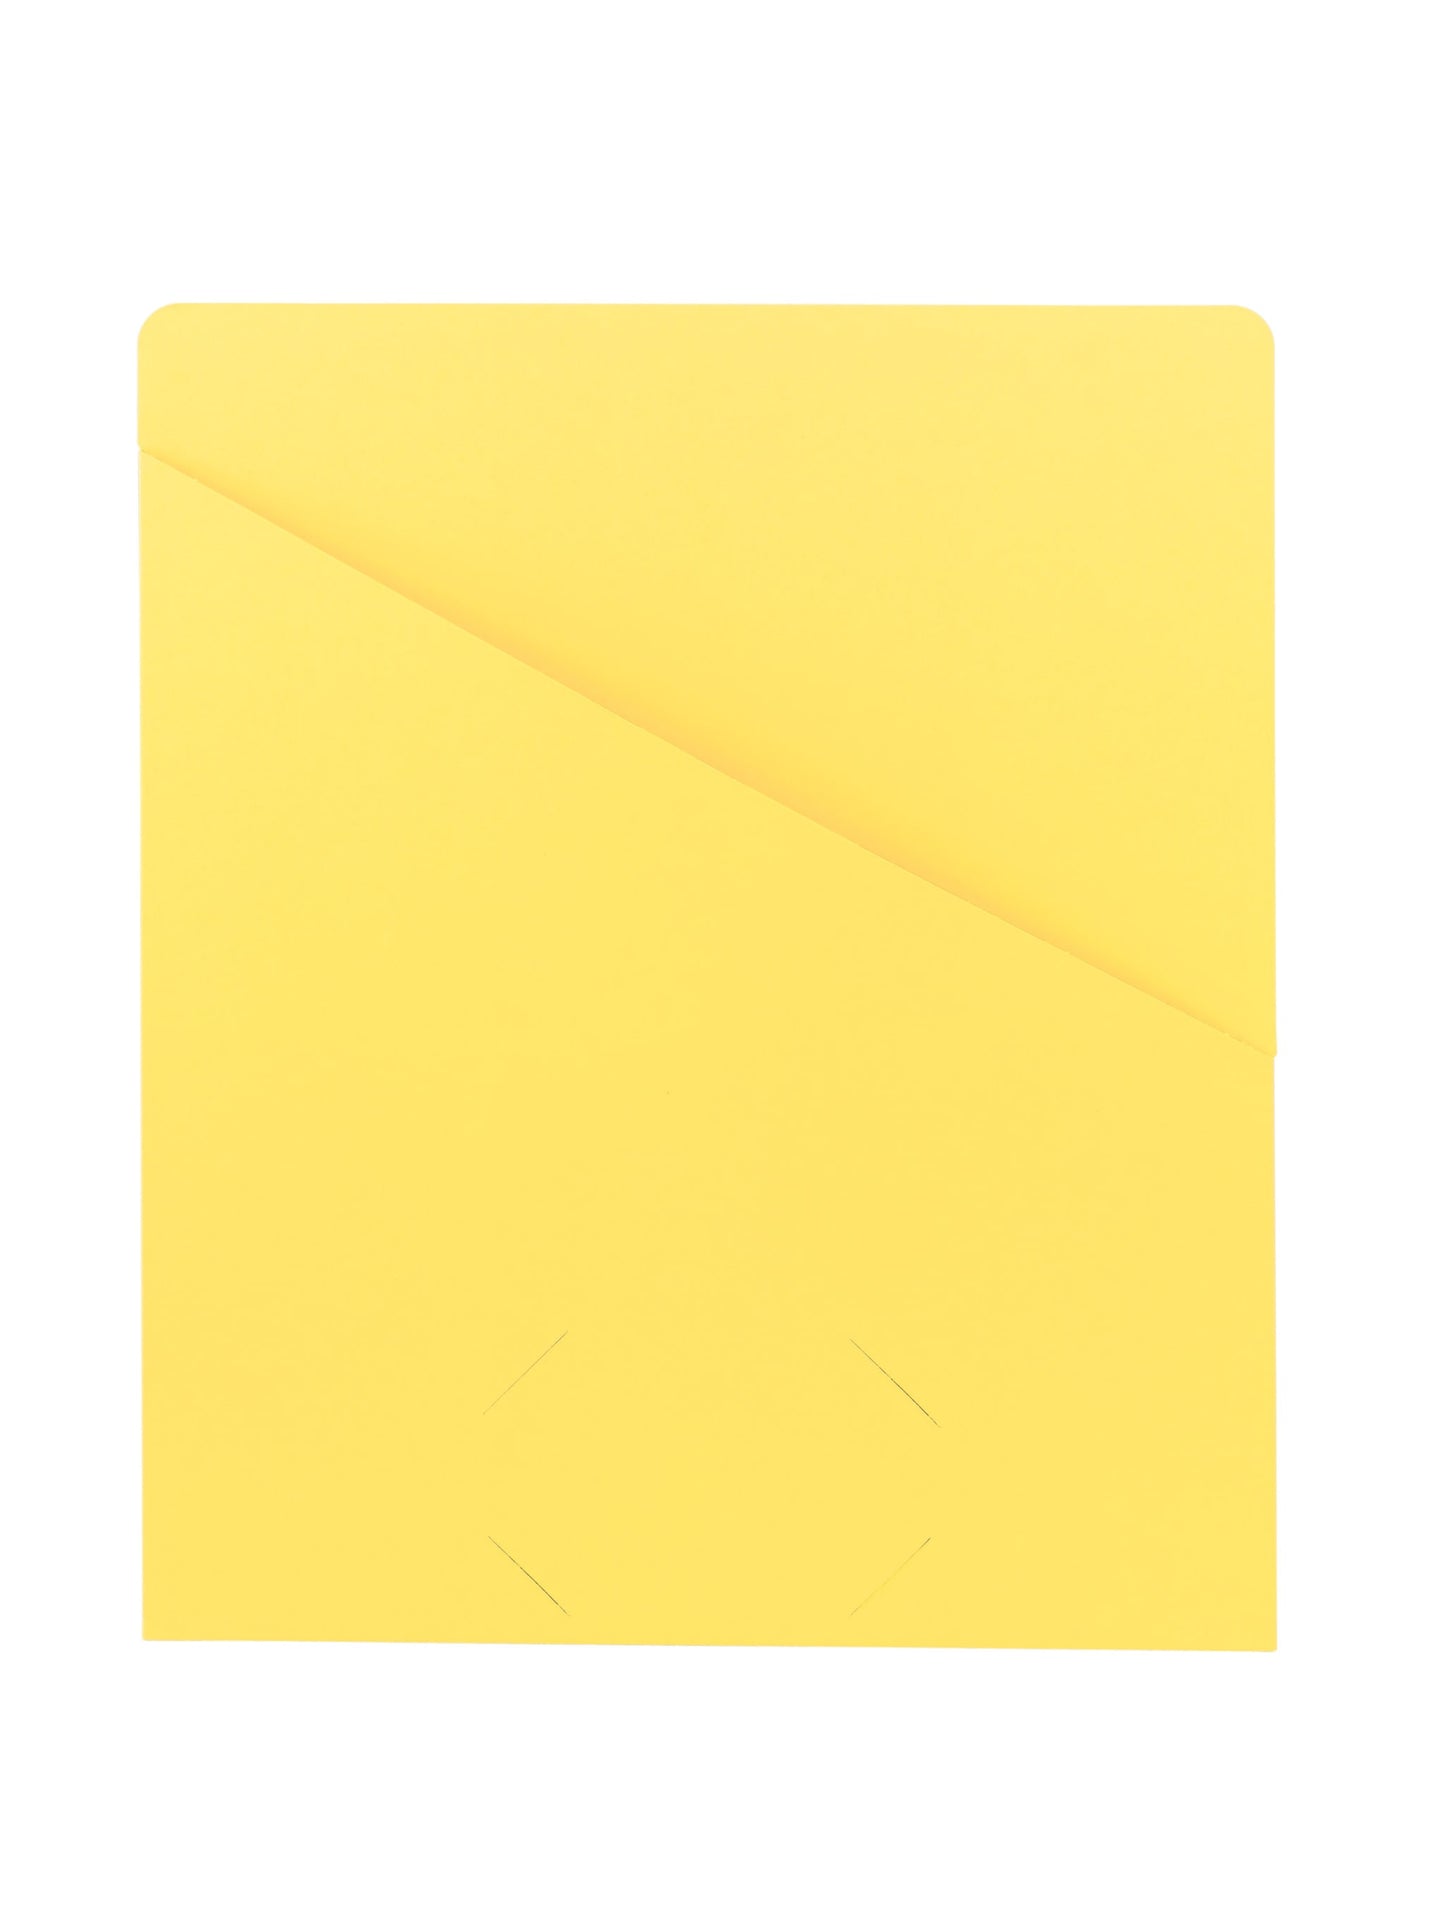 Organized Up® Slash Jackets, Flat-No Expansion, Yellow Color, Letter Size, Set of 1, 086486754347